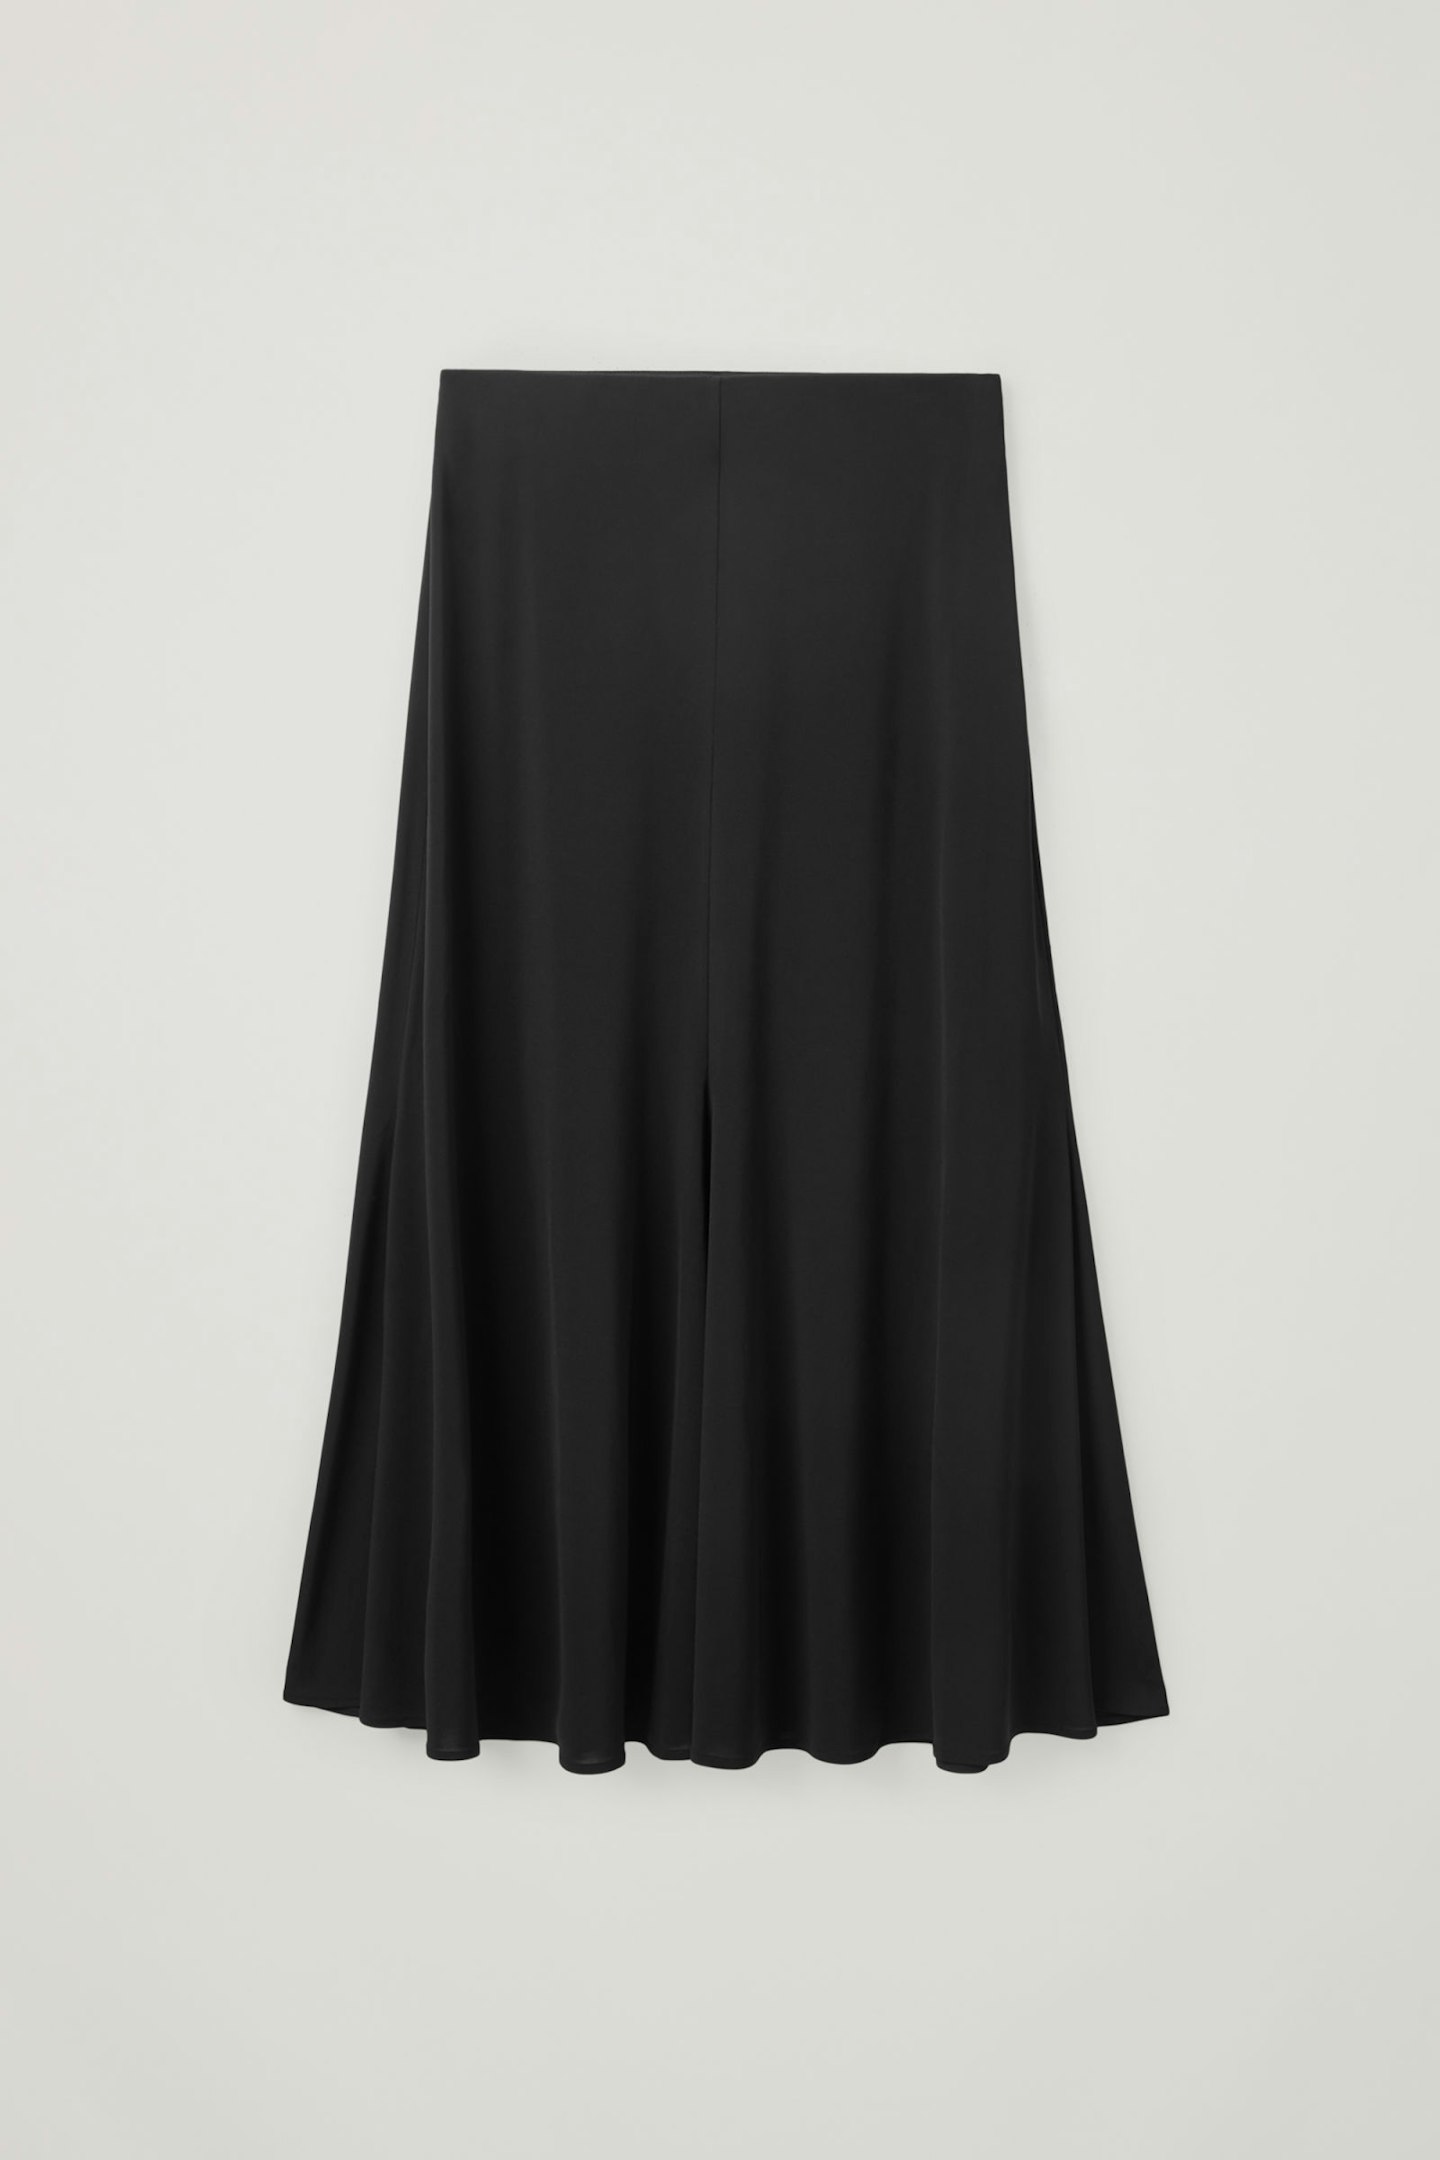 COS, Flared Midi Skirt, £59